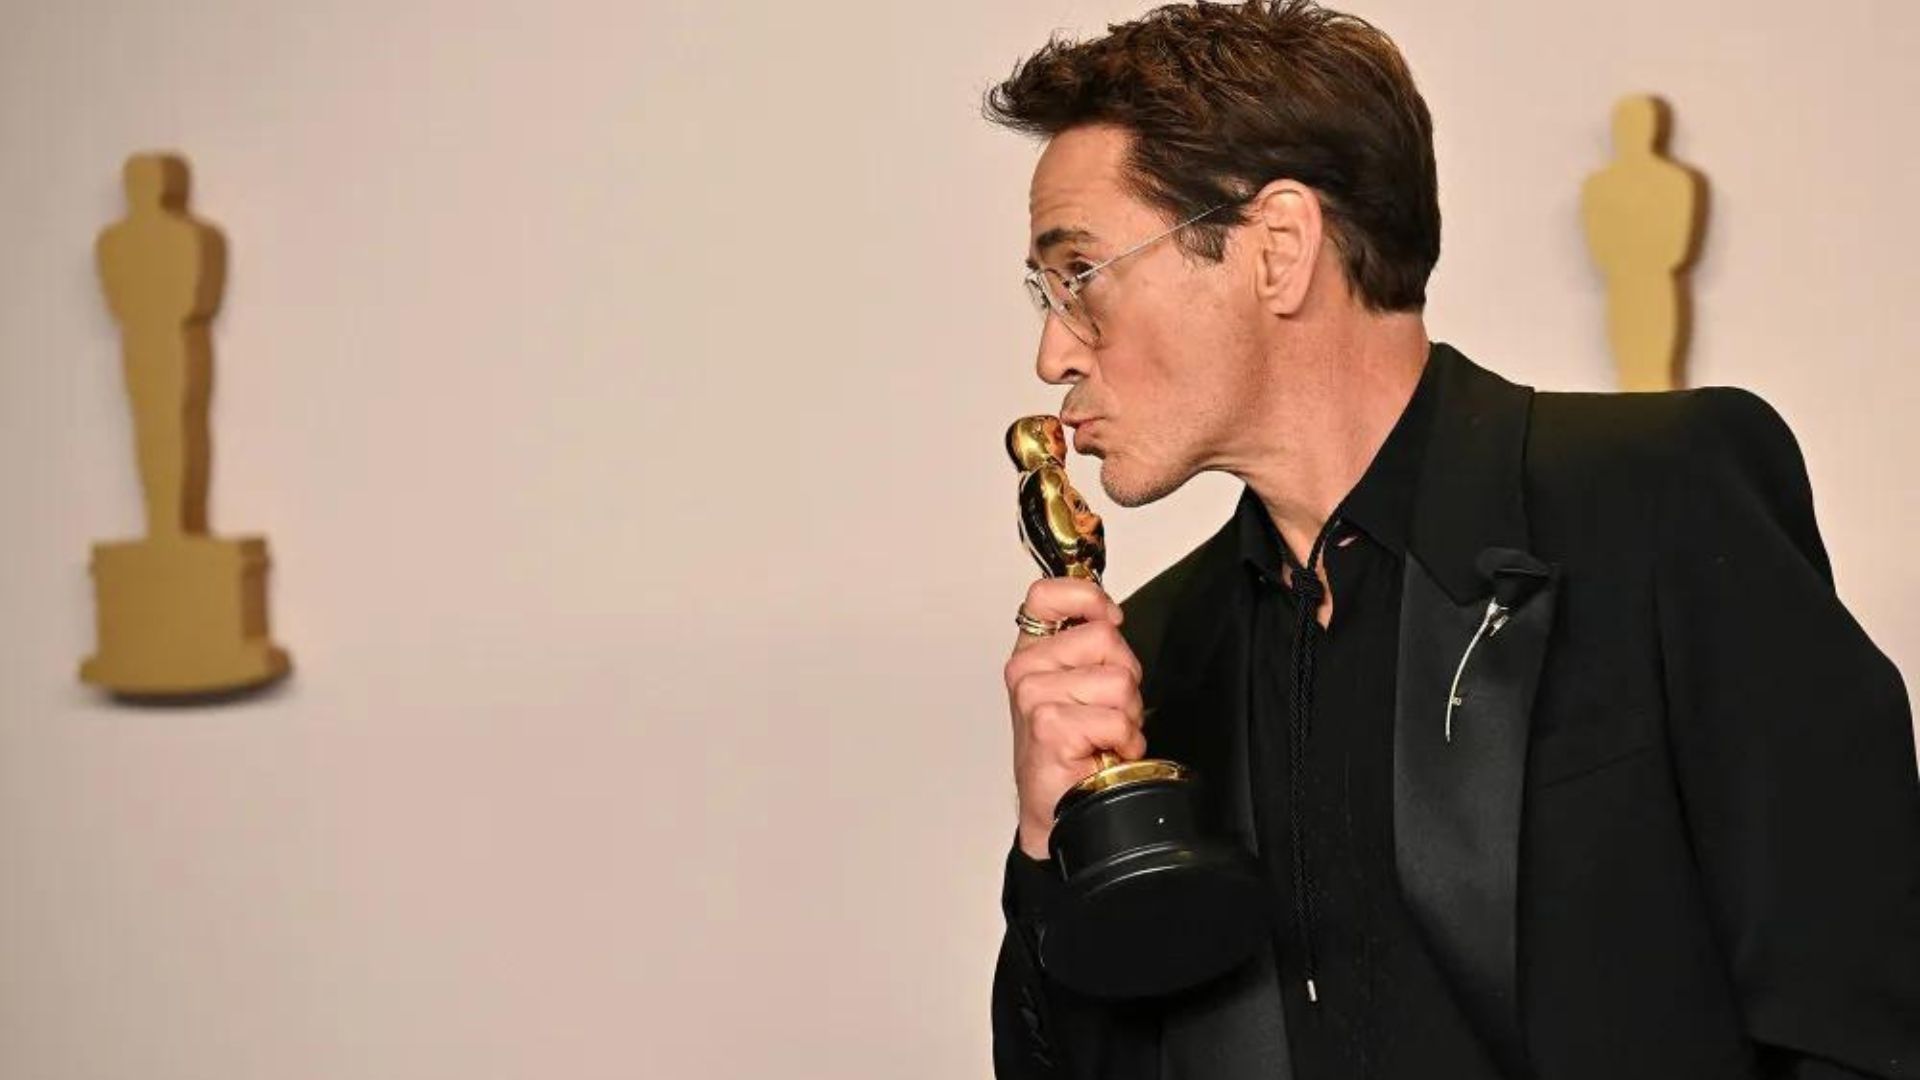 Robert Downey Jr. Wins Best Supporting Actor